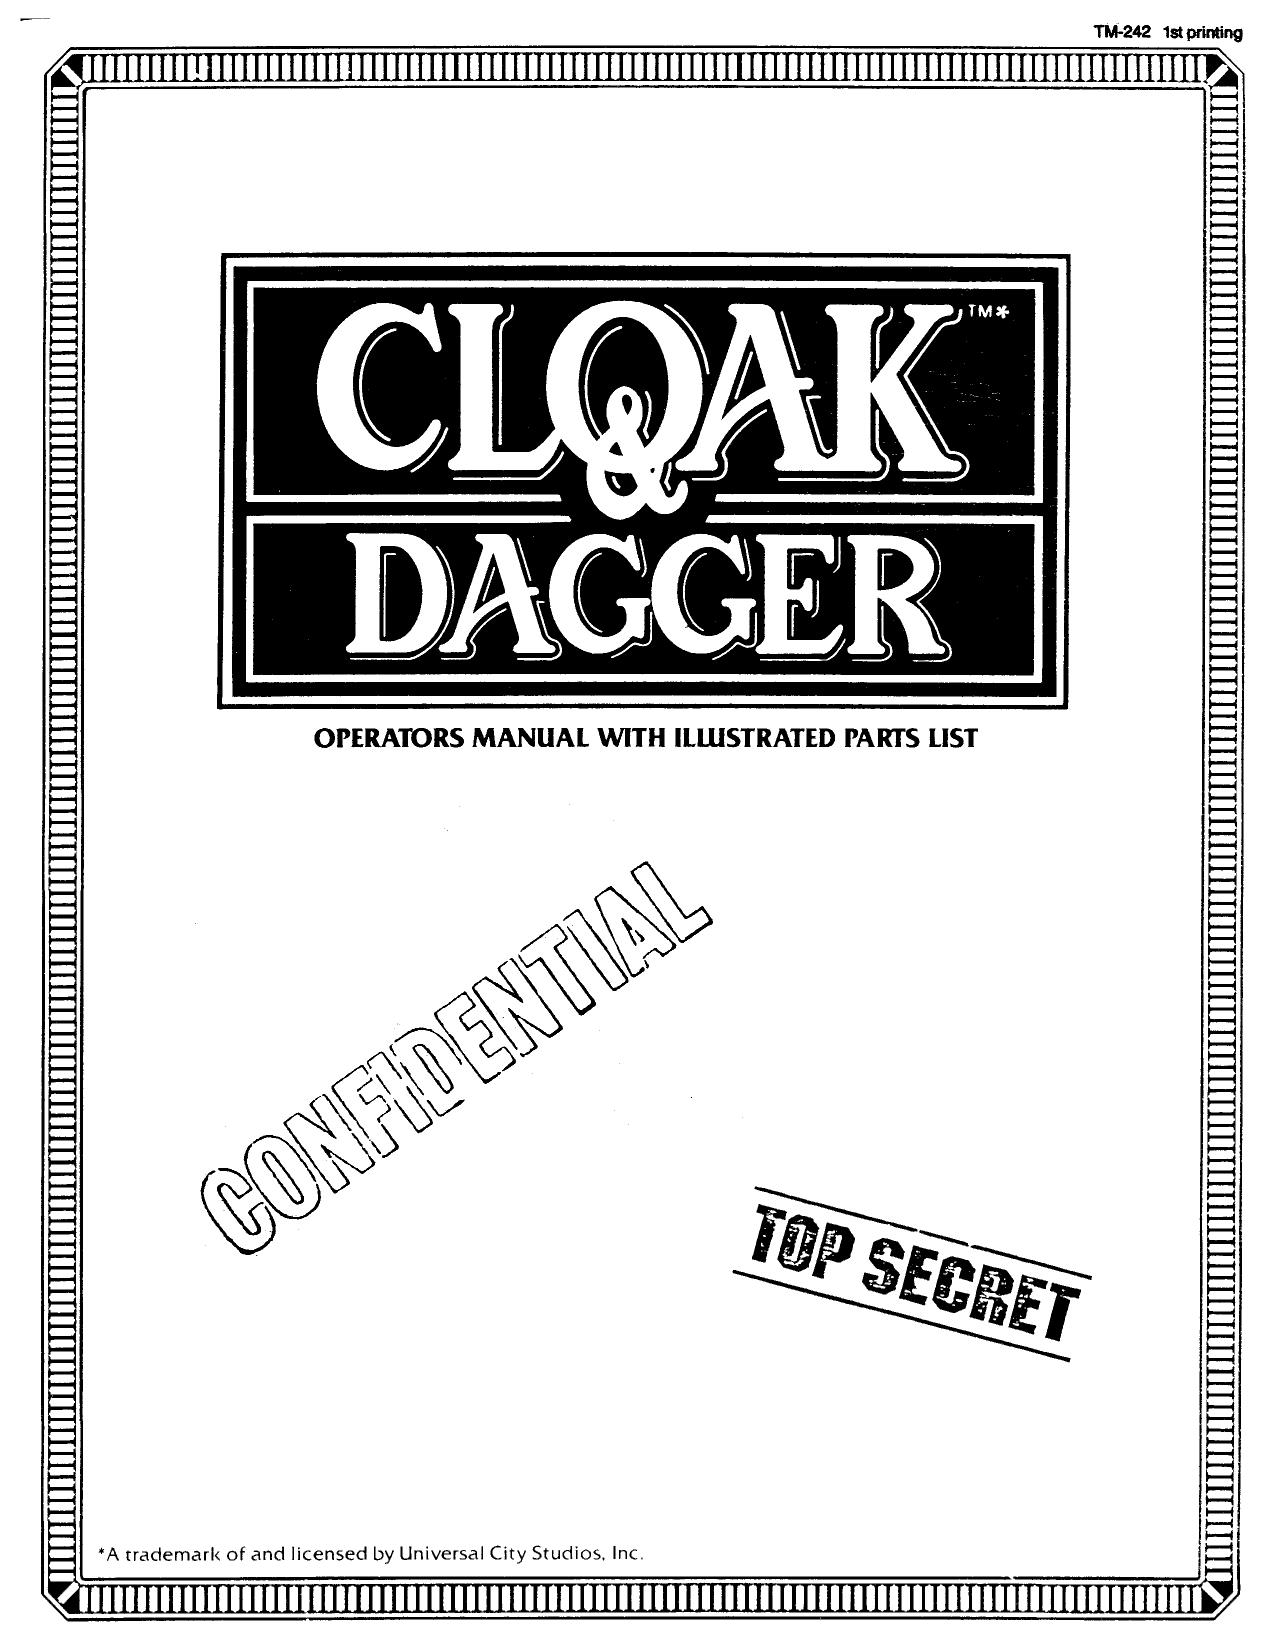 Cloak and Dagger (TM-242 1st Printing) (Op & Parts) (U)